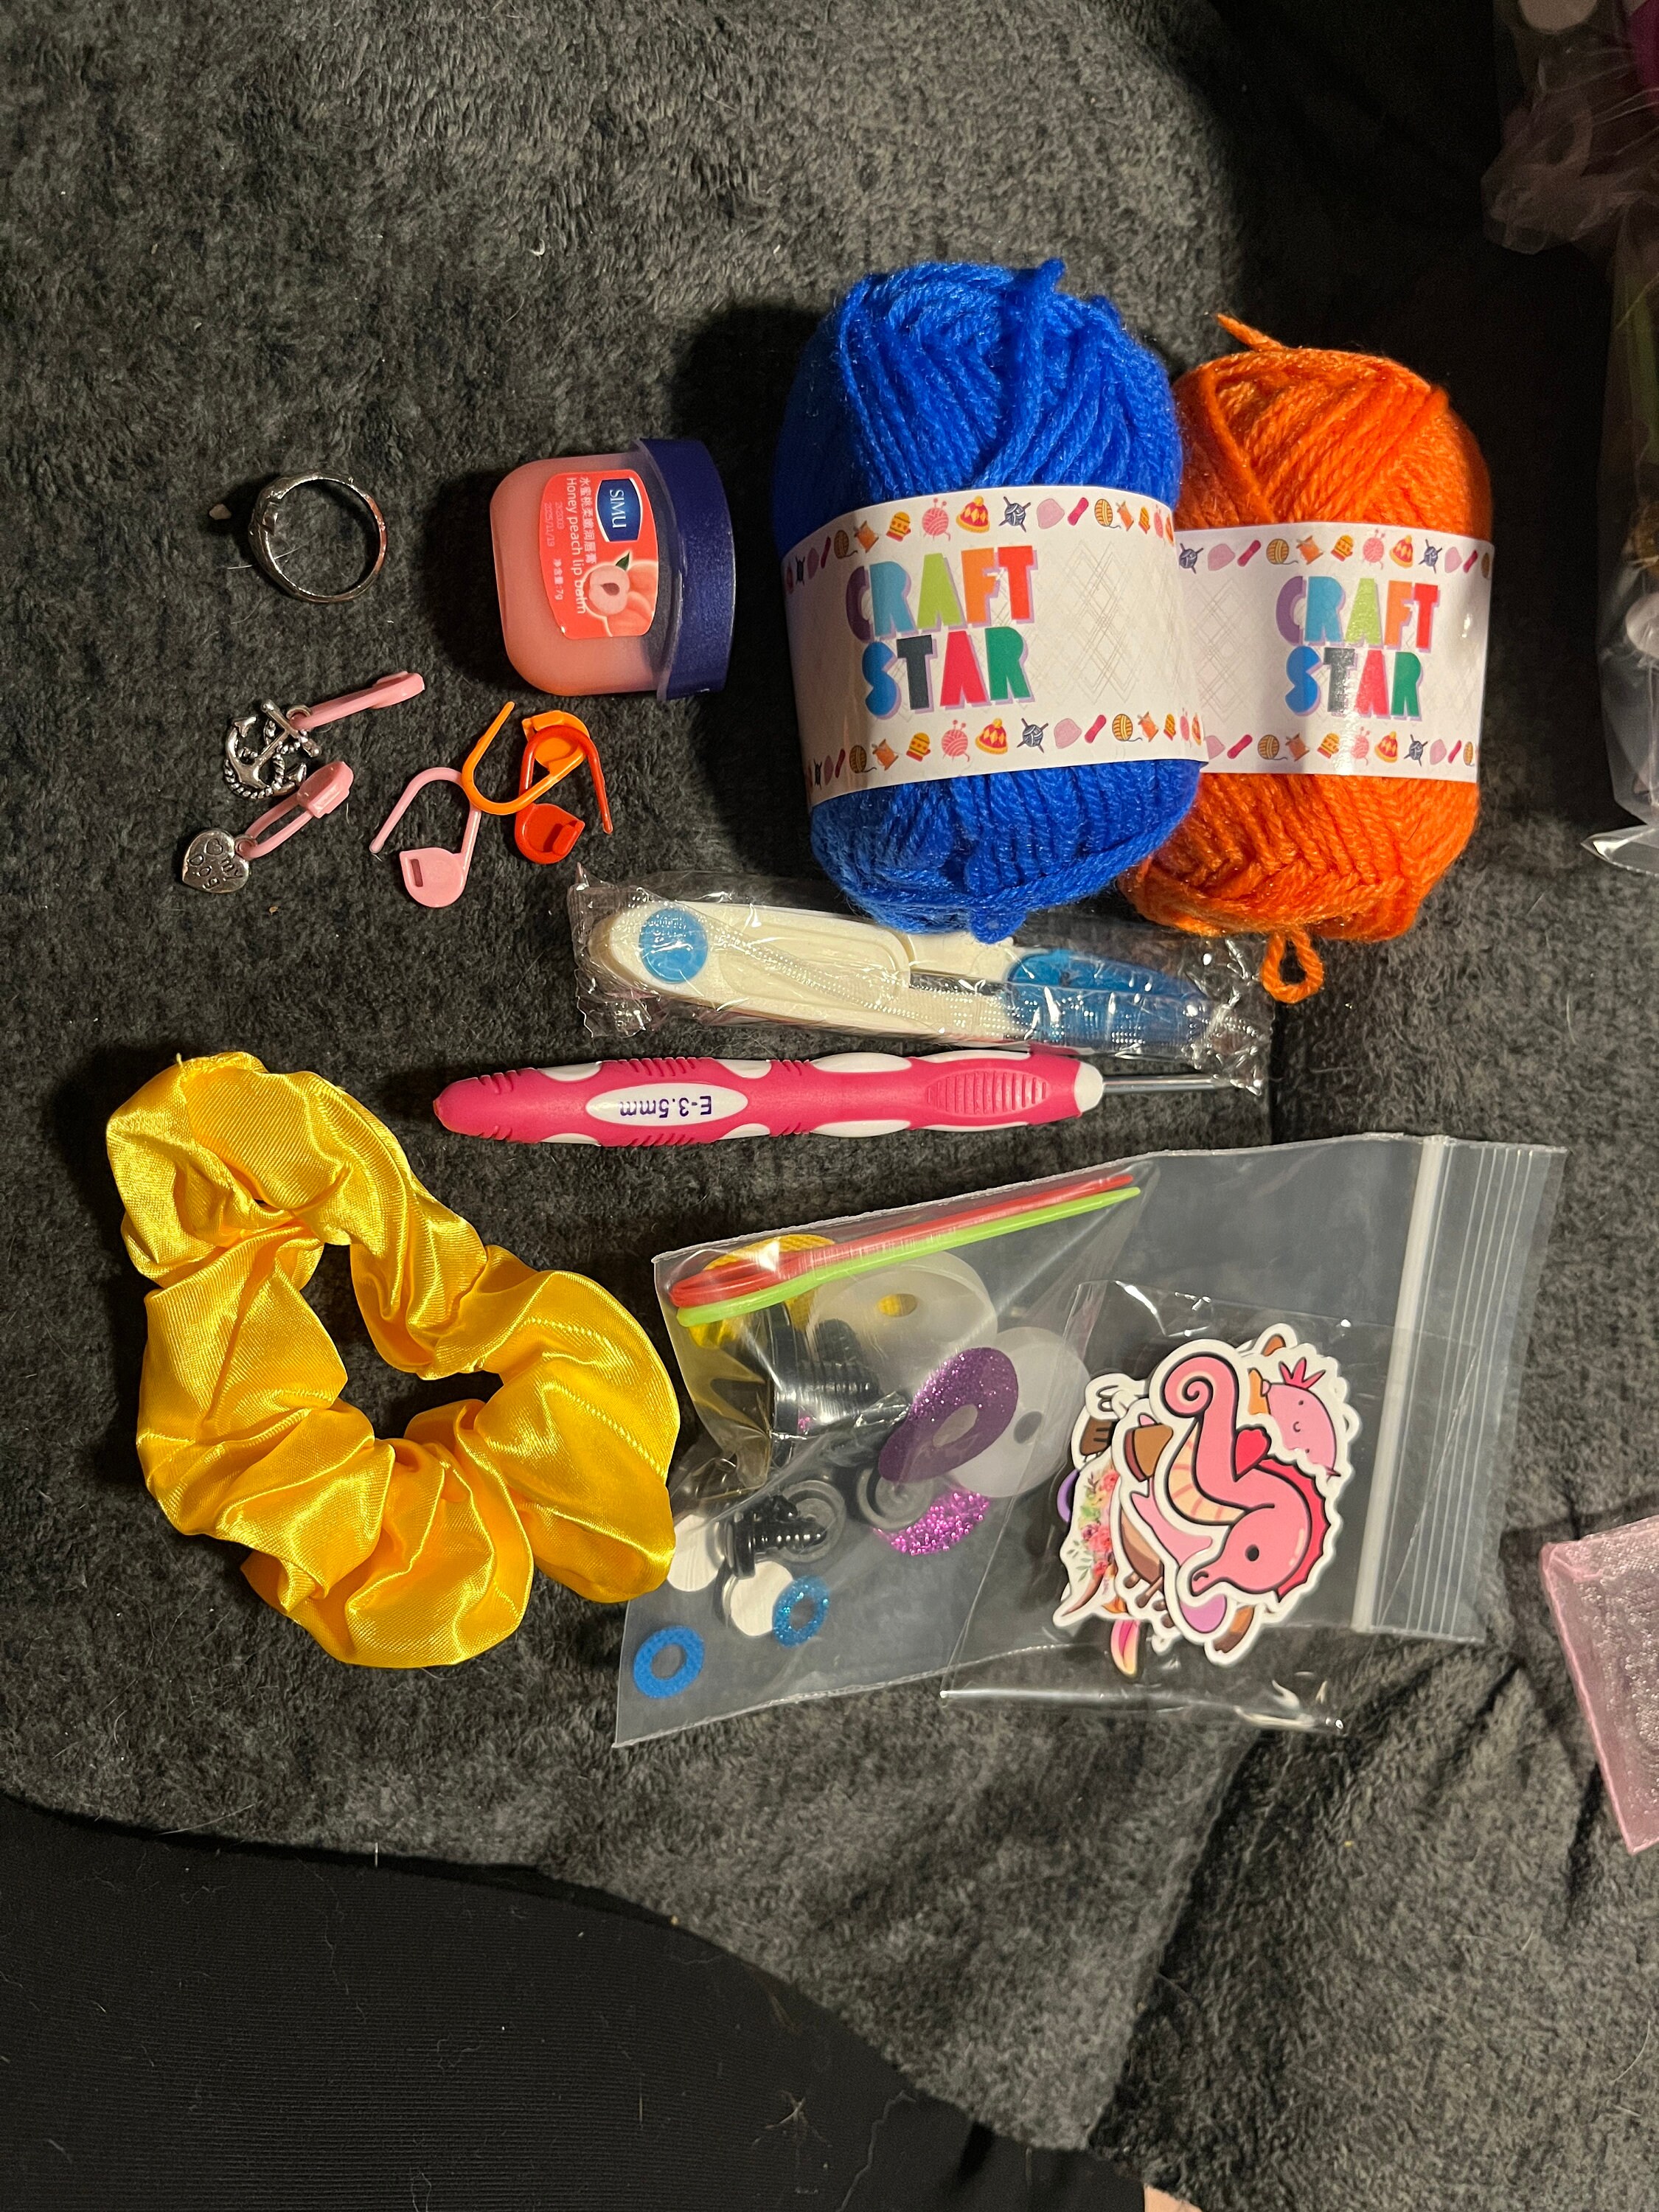 Crochet Grab Bag